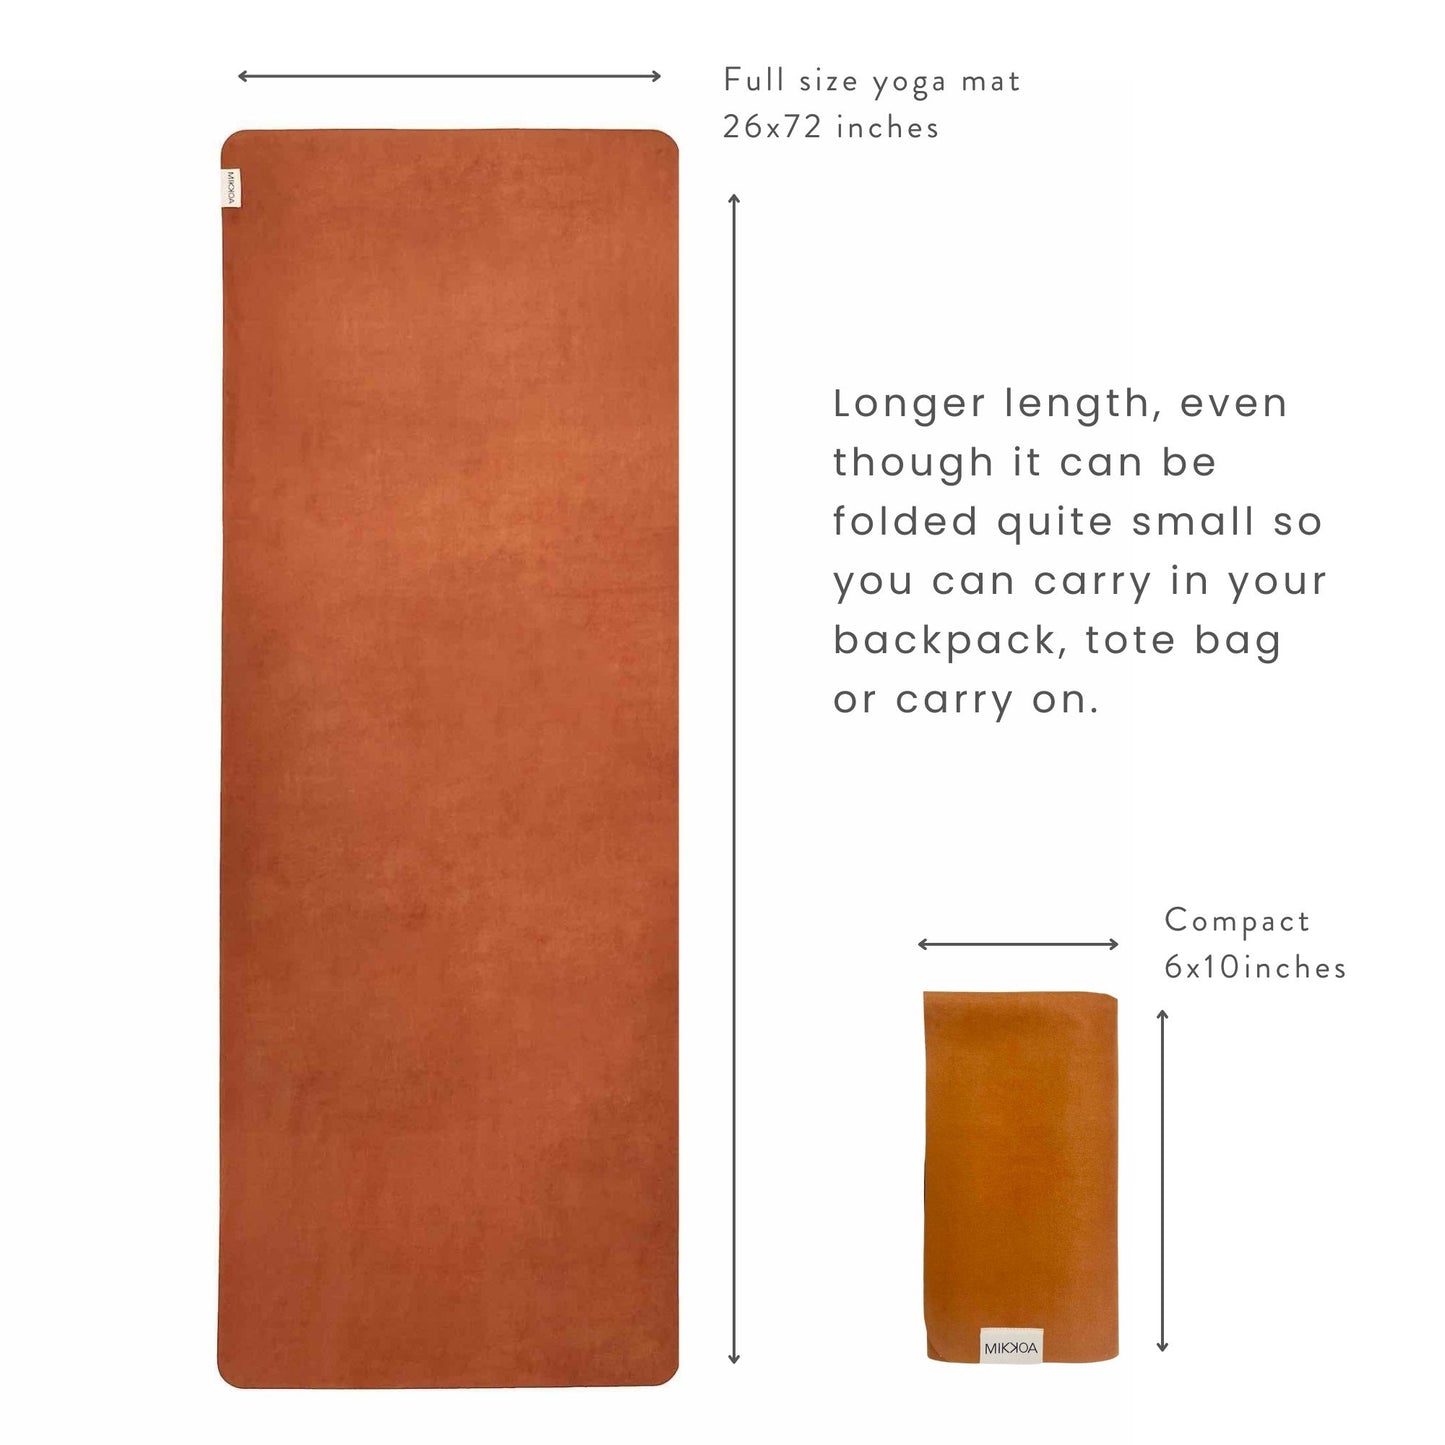 Folded Yoga Mat-Orange Open and Folded Yoga Mat-Mikkoa Folded Yoga Mat